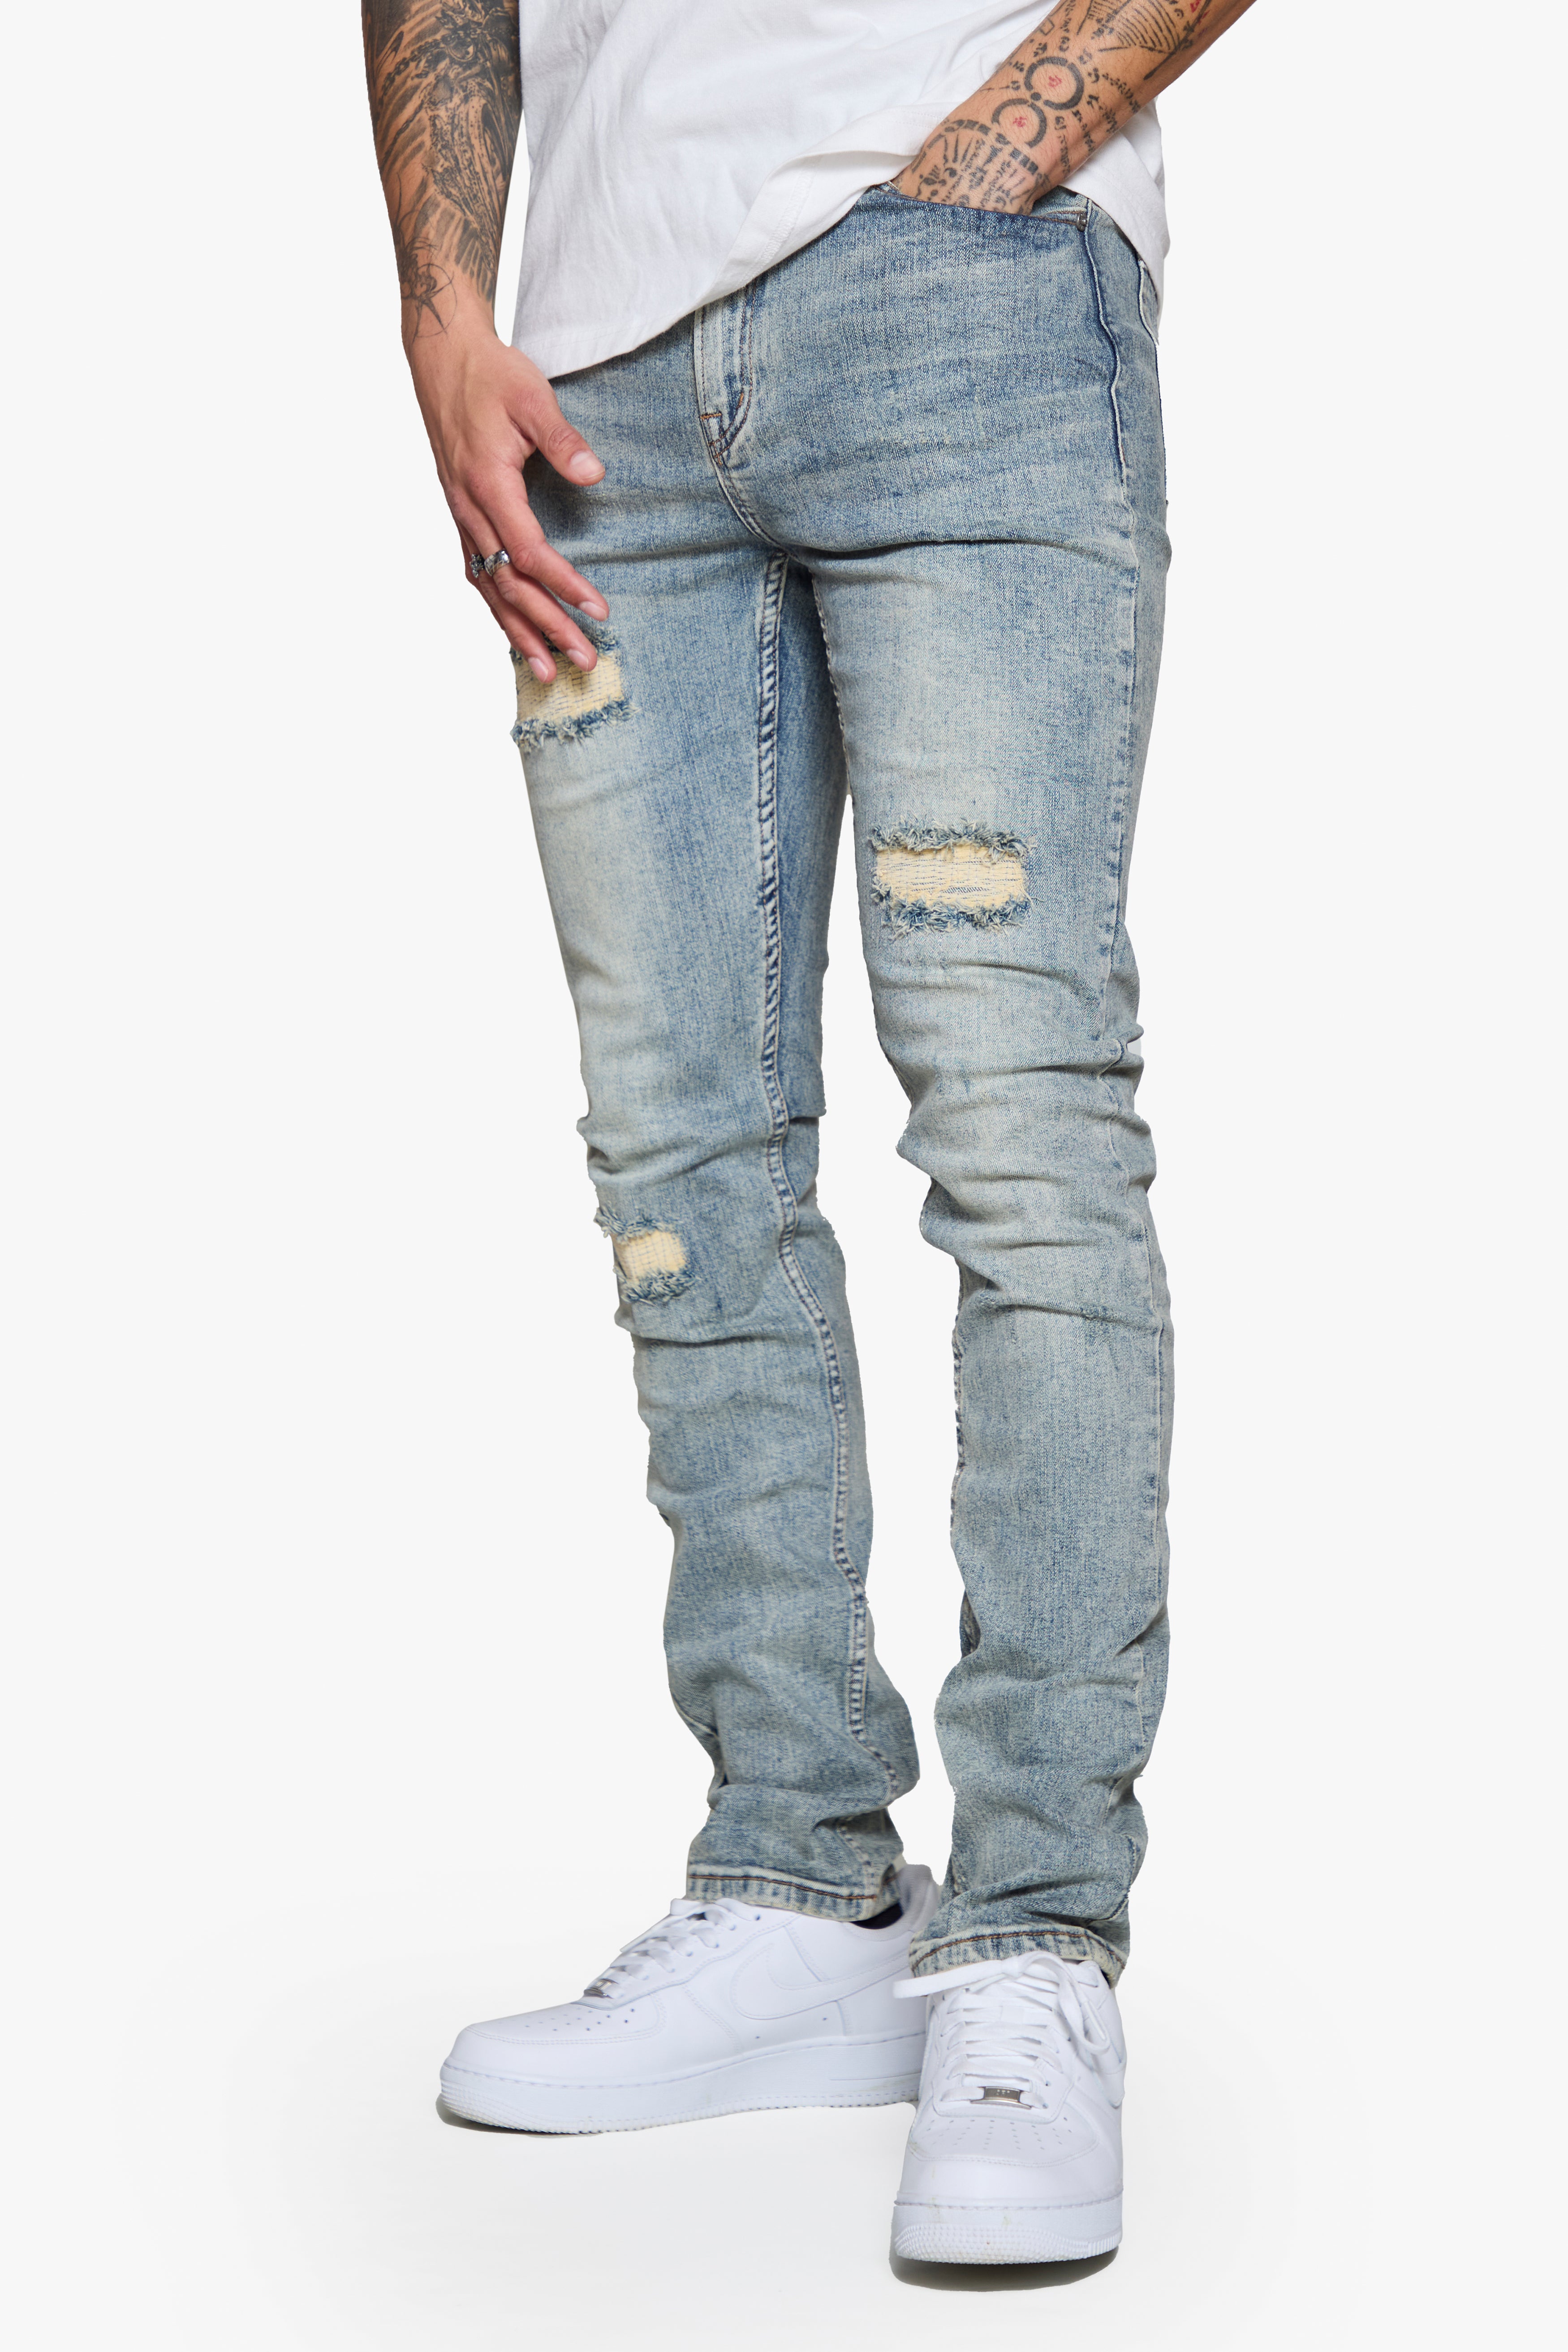 ANOM DENIM Stretch & Selvedge Jeans For Men